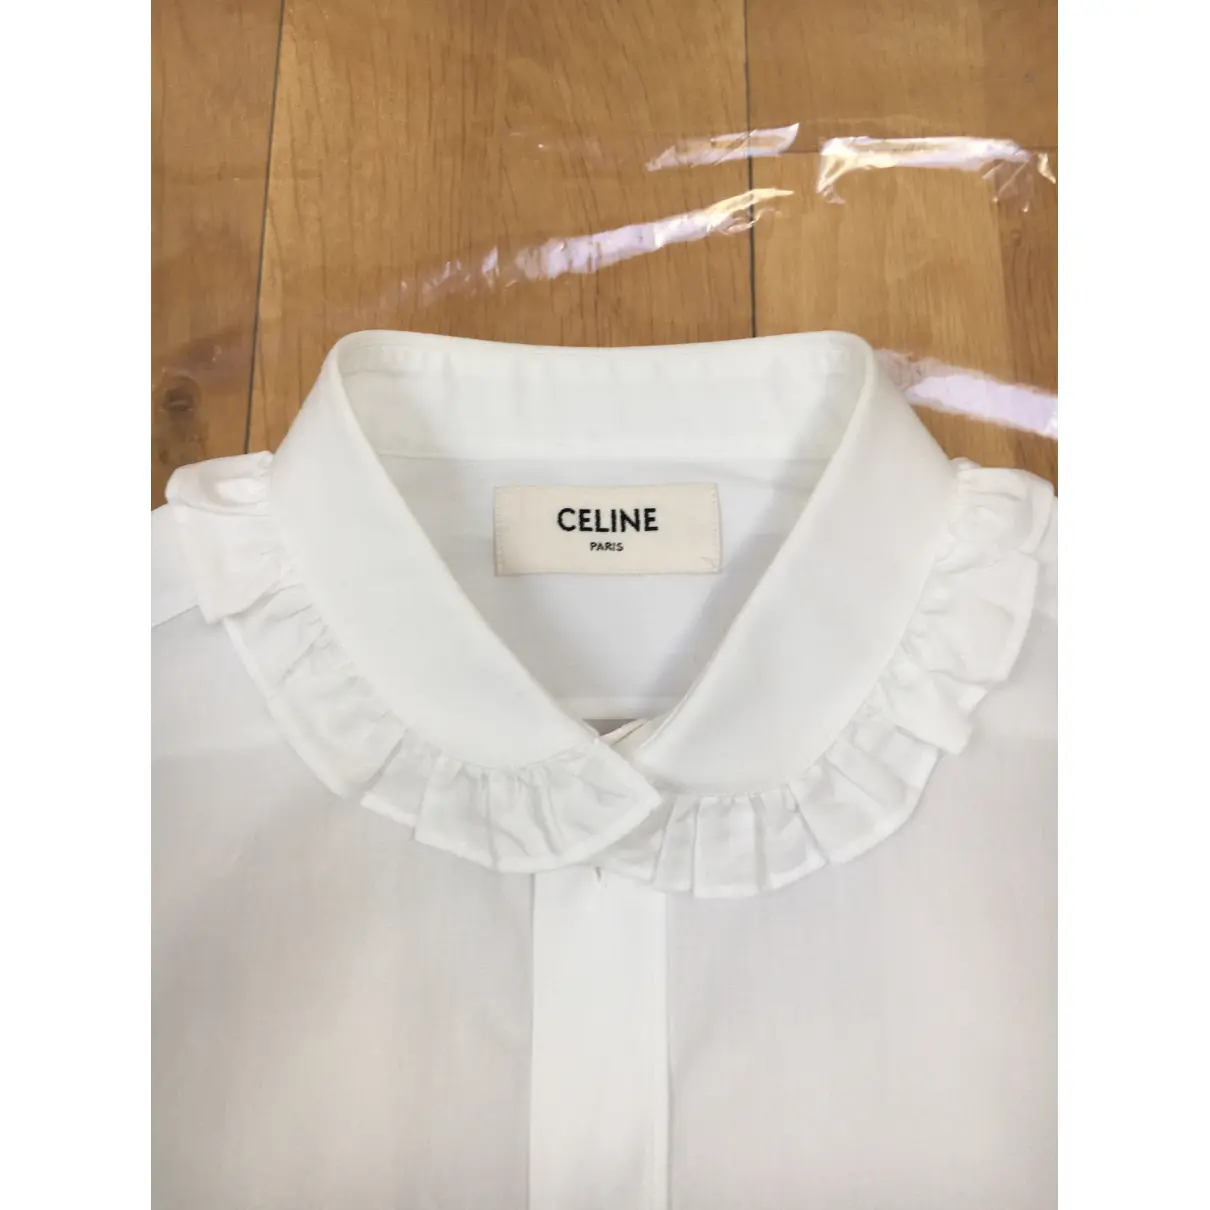 Buy Celine Shirt online